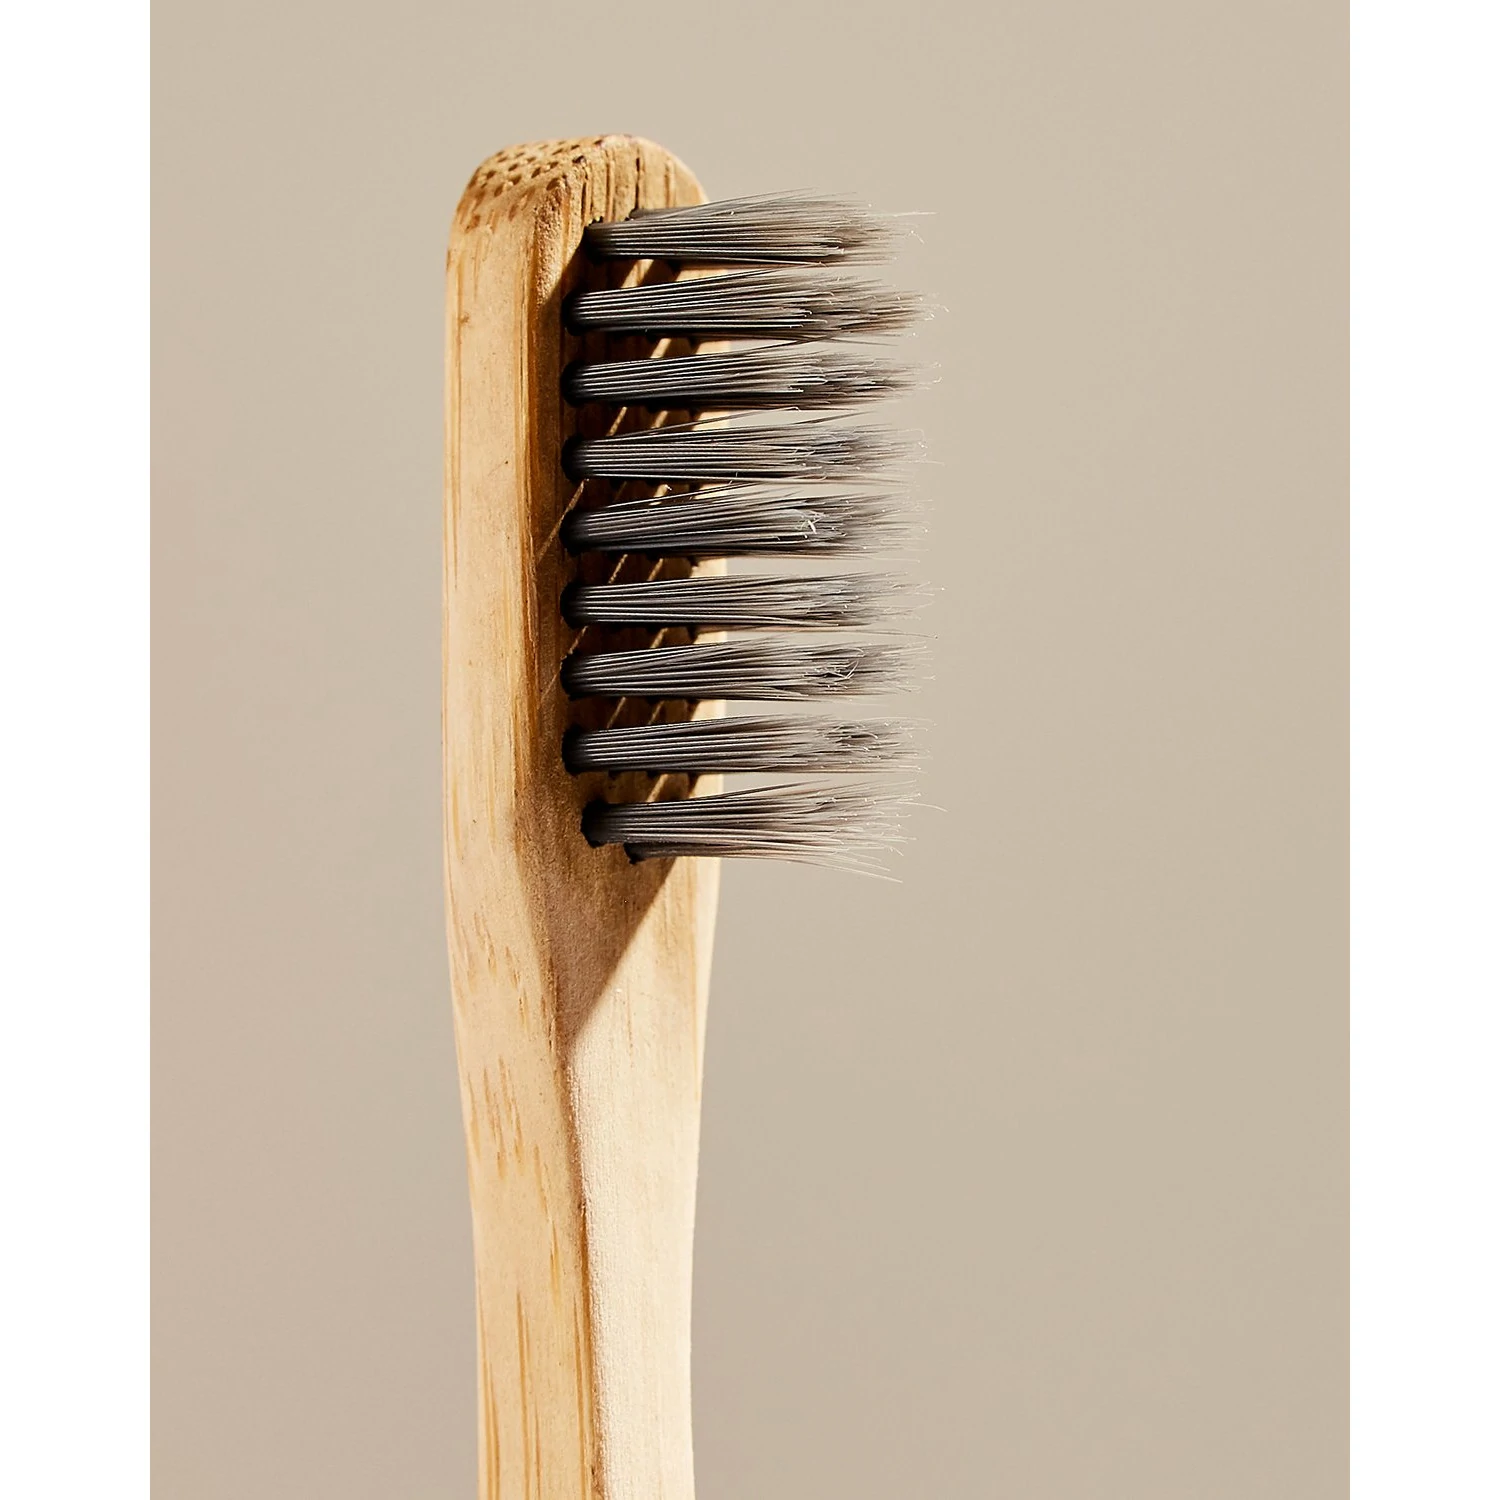 Product: The Gaea Store Premium Bamboo Toothbrush – Pack of 2